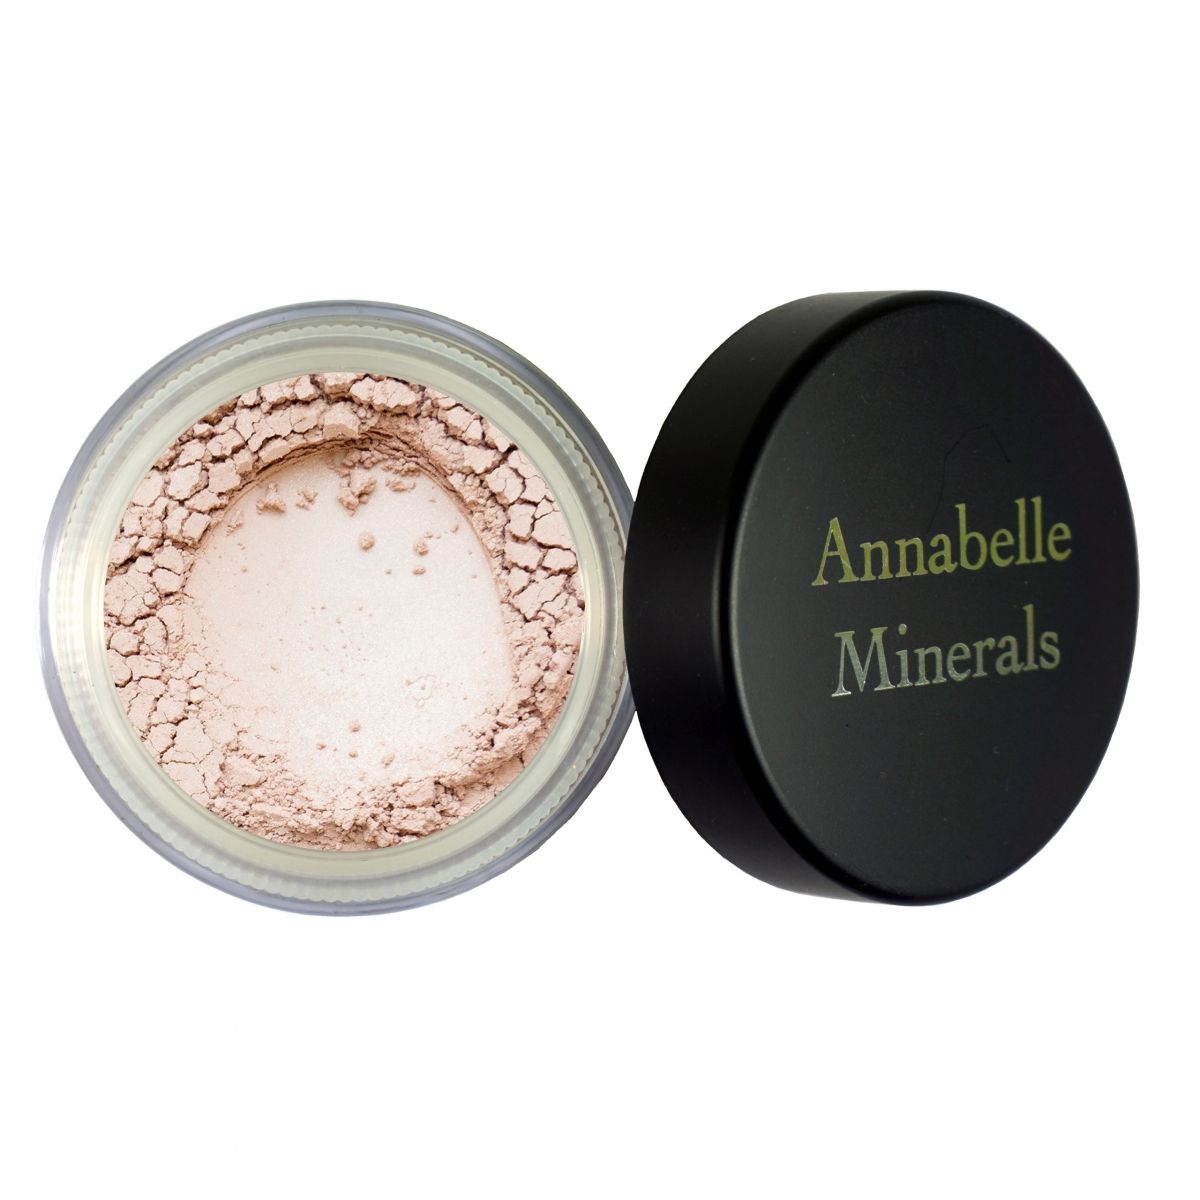 Annabelle Minerals Cień mineralny w odcieniu Cinnamon - 3g